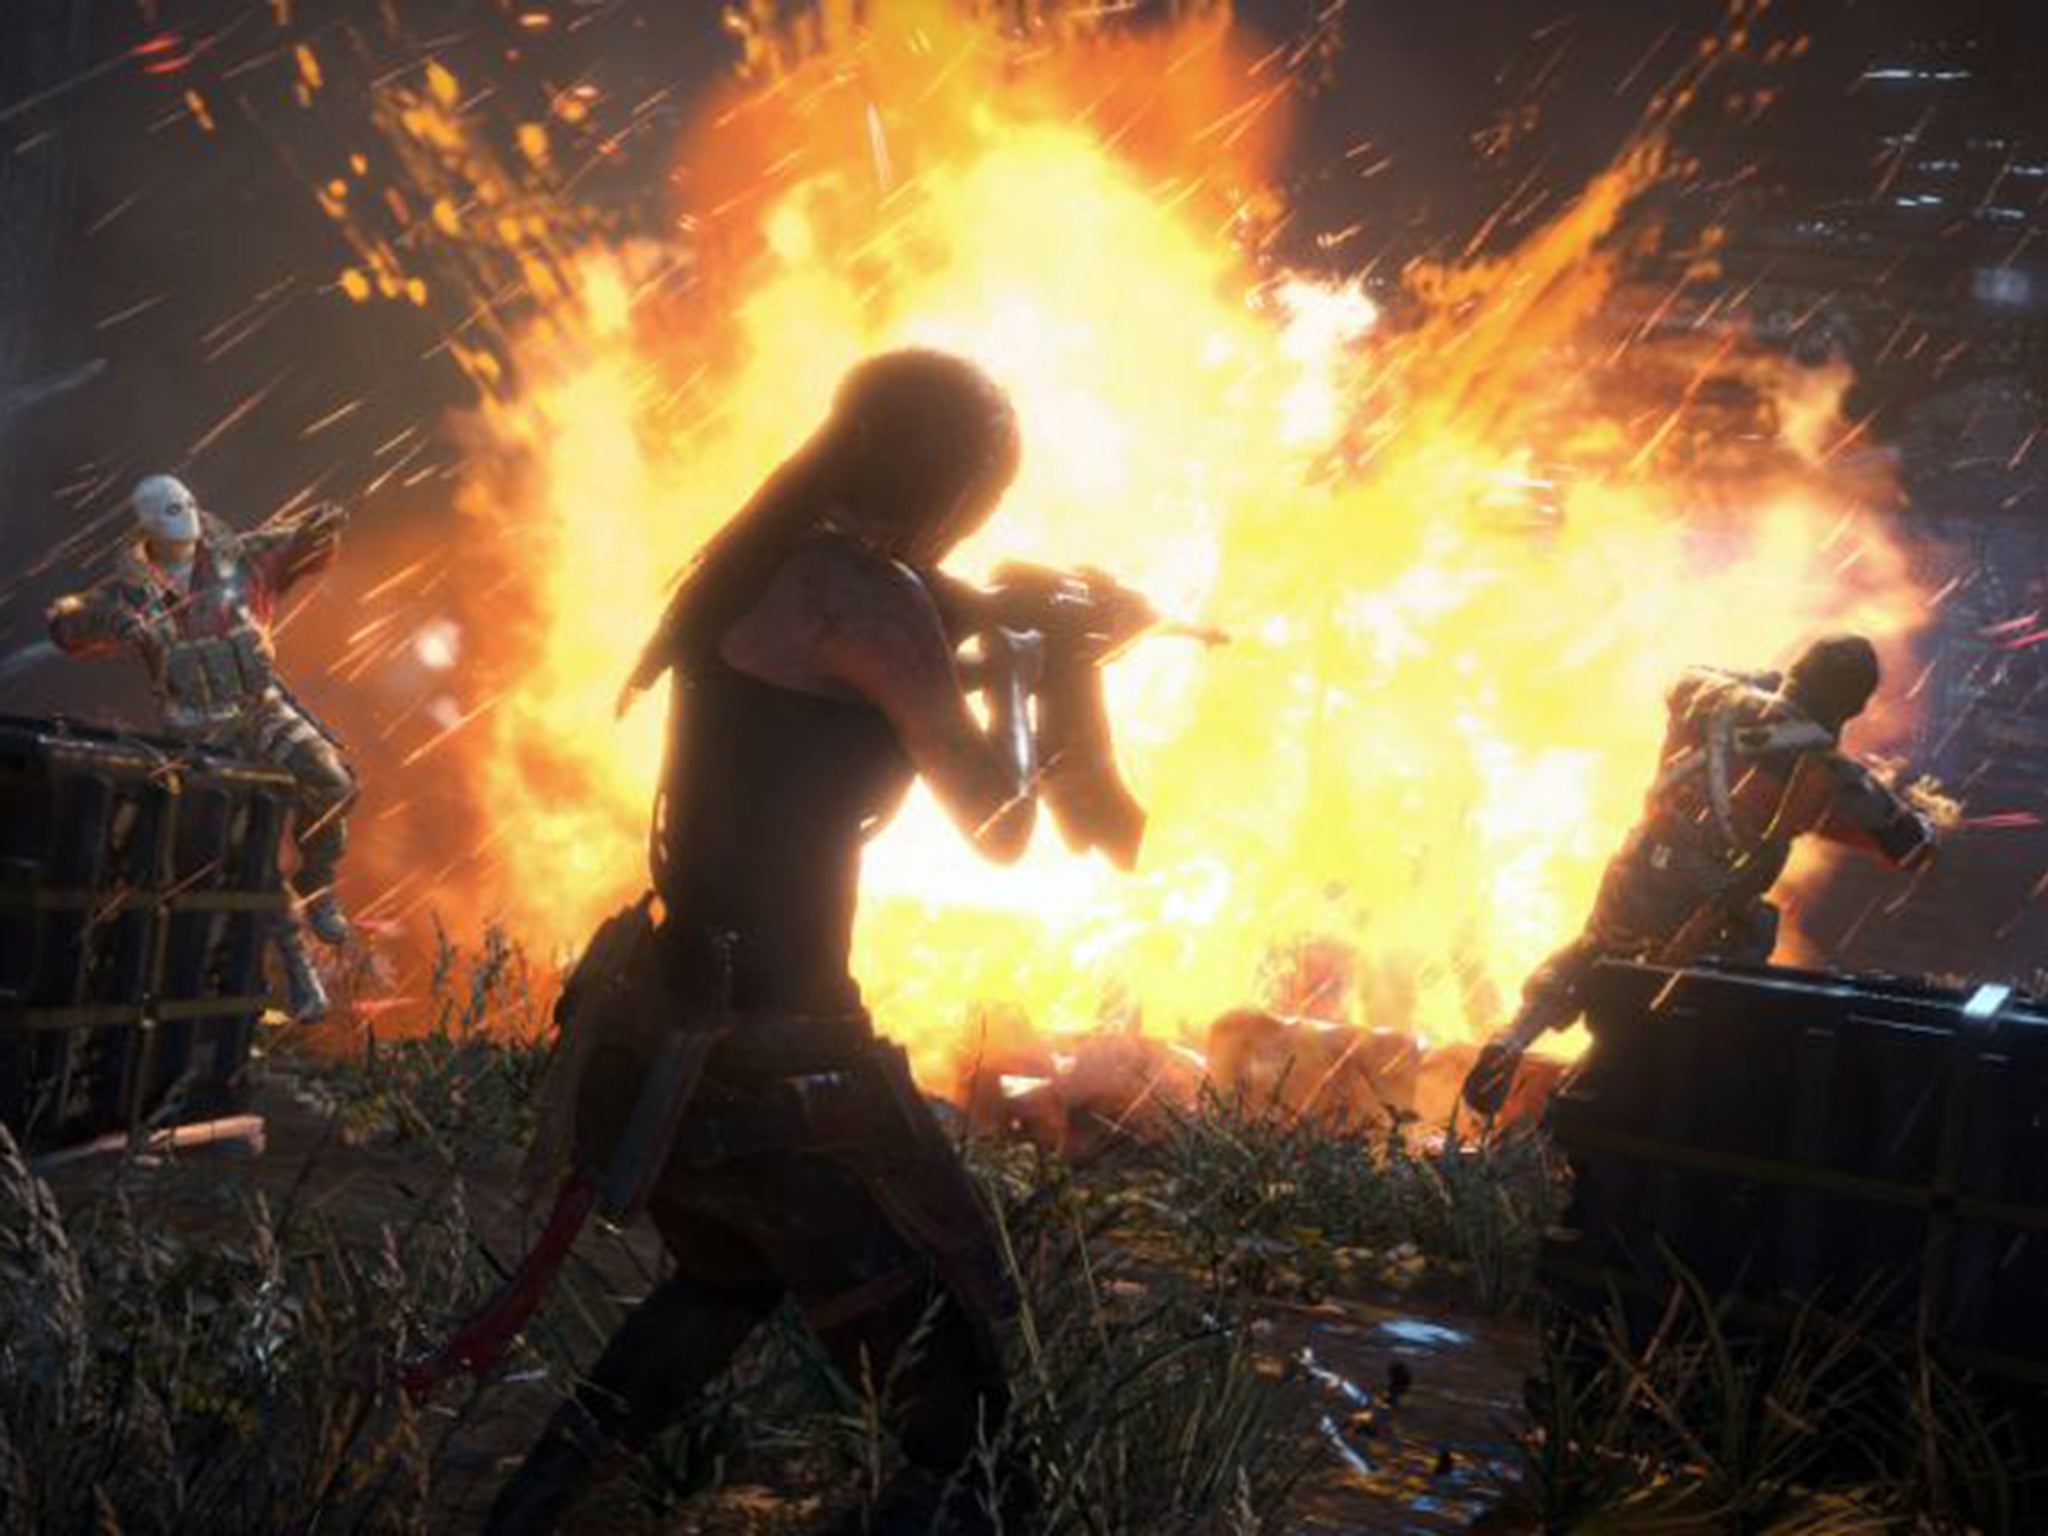 A screenshot of Lara Croft in "Rise of the Tomb Raider"